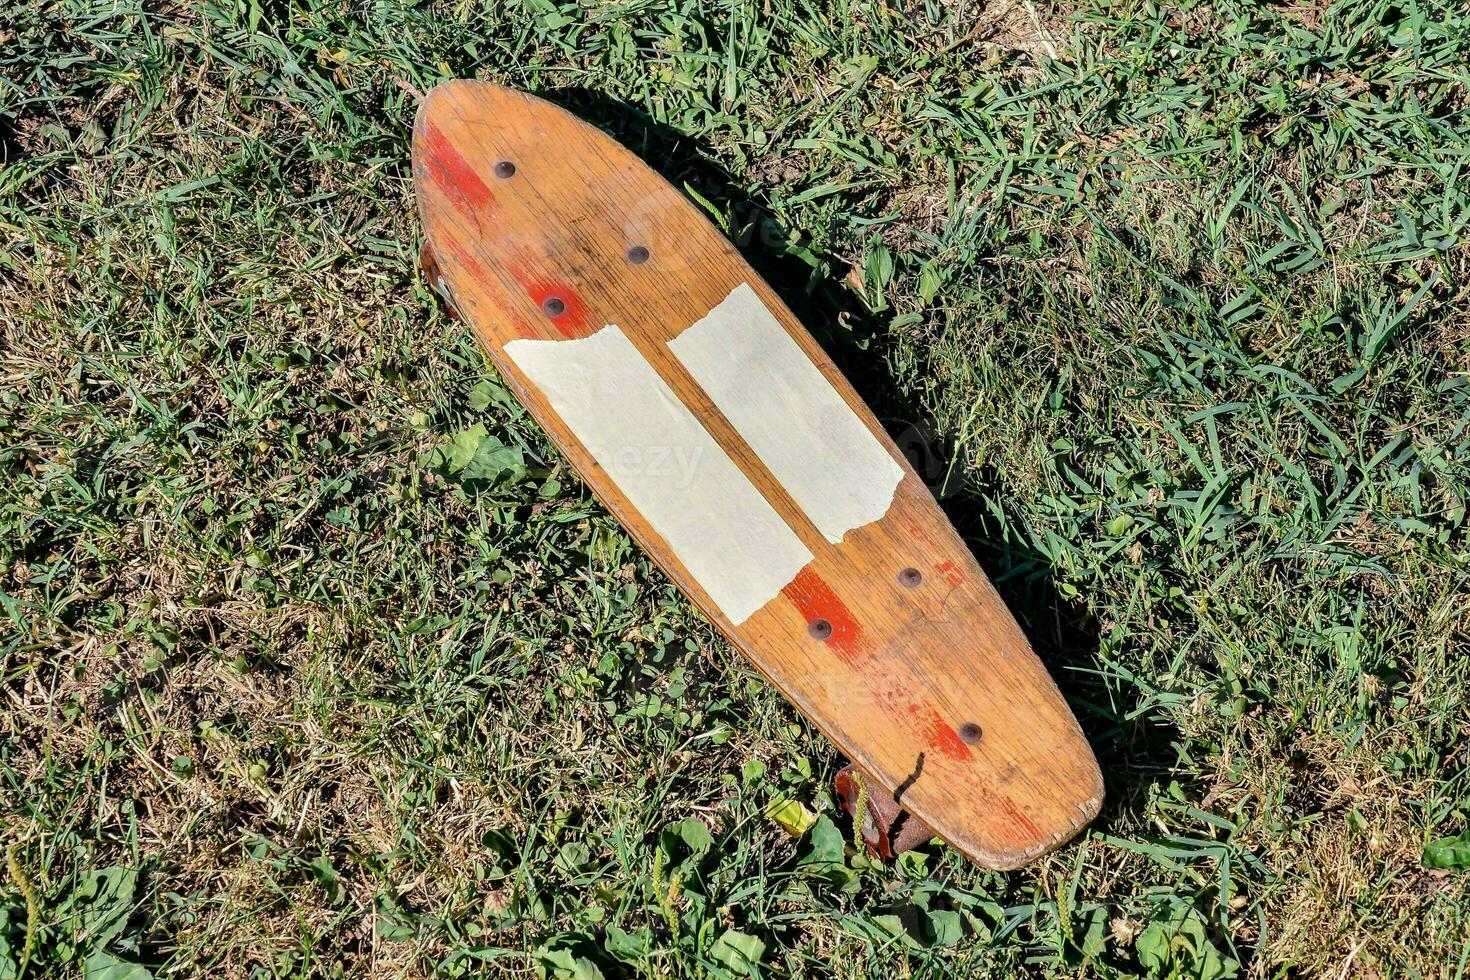 en trä- skateboard om på de gräs foto